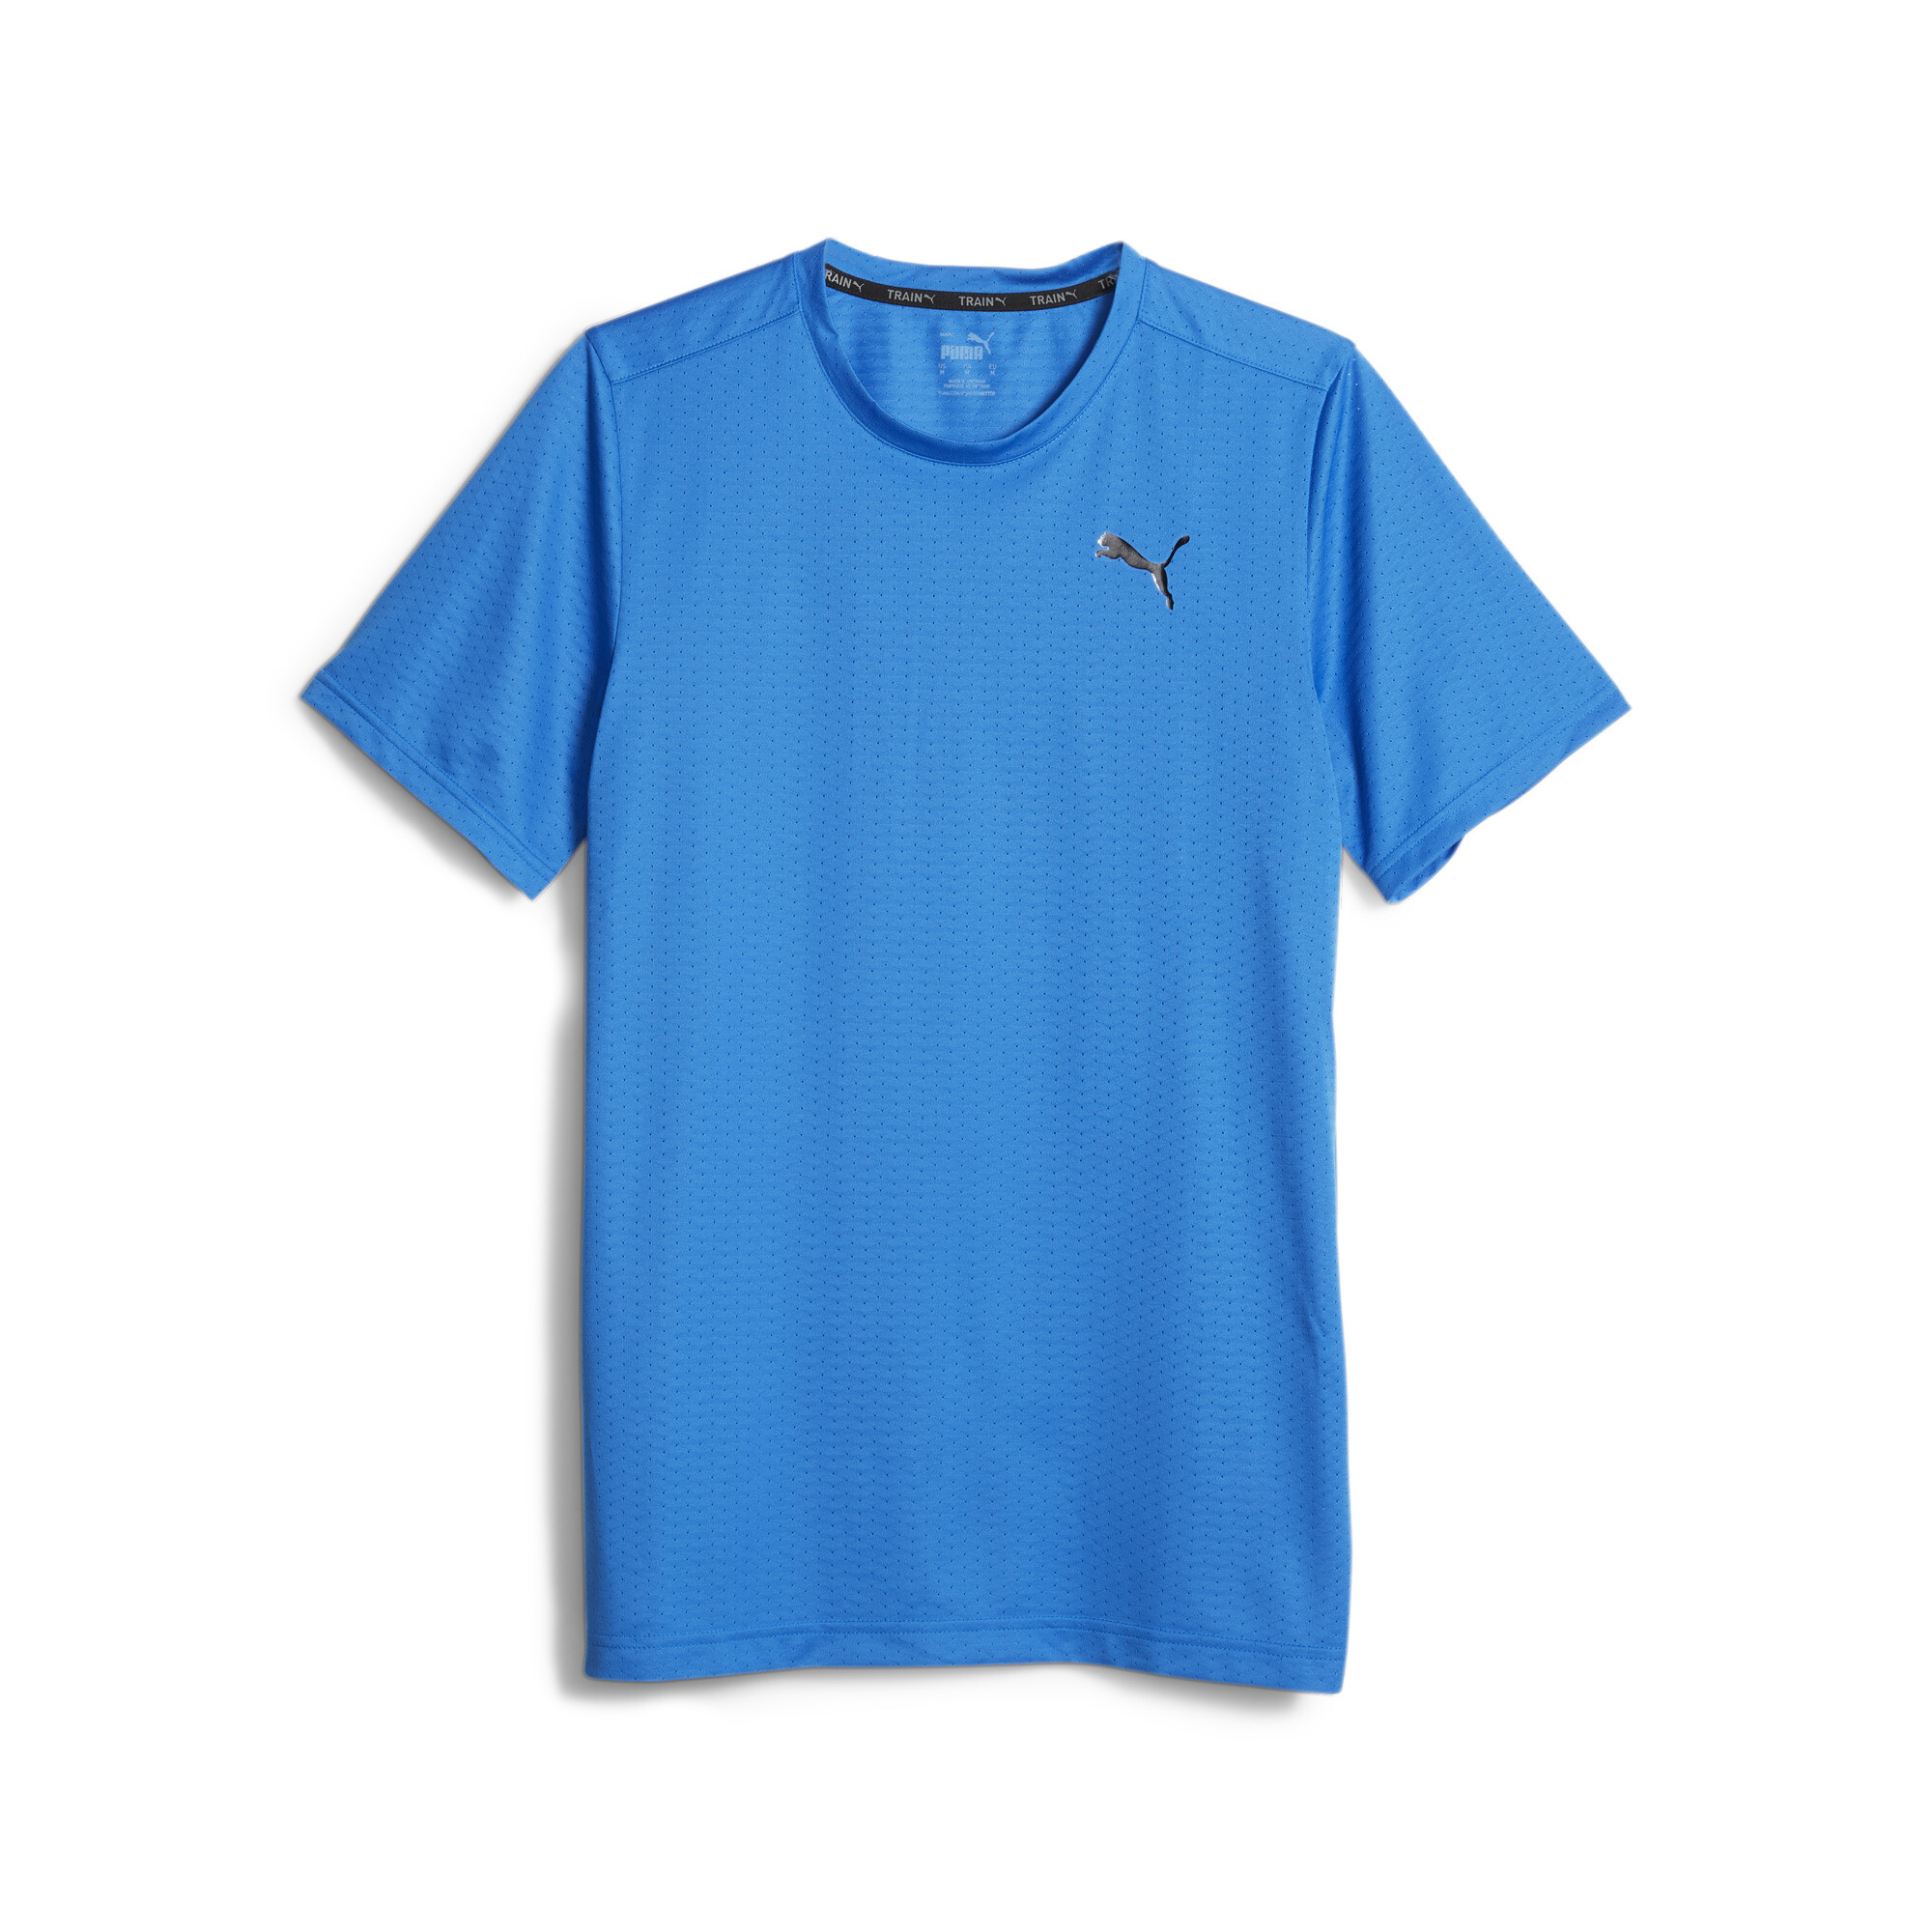 Men's Puma Favourite Blaster Training T-Shirt, Blue, Size XS, Clothing